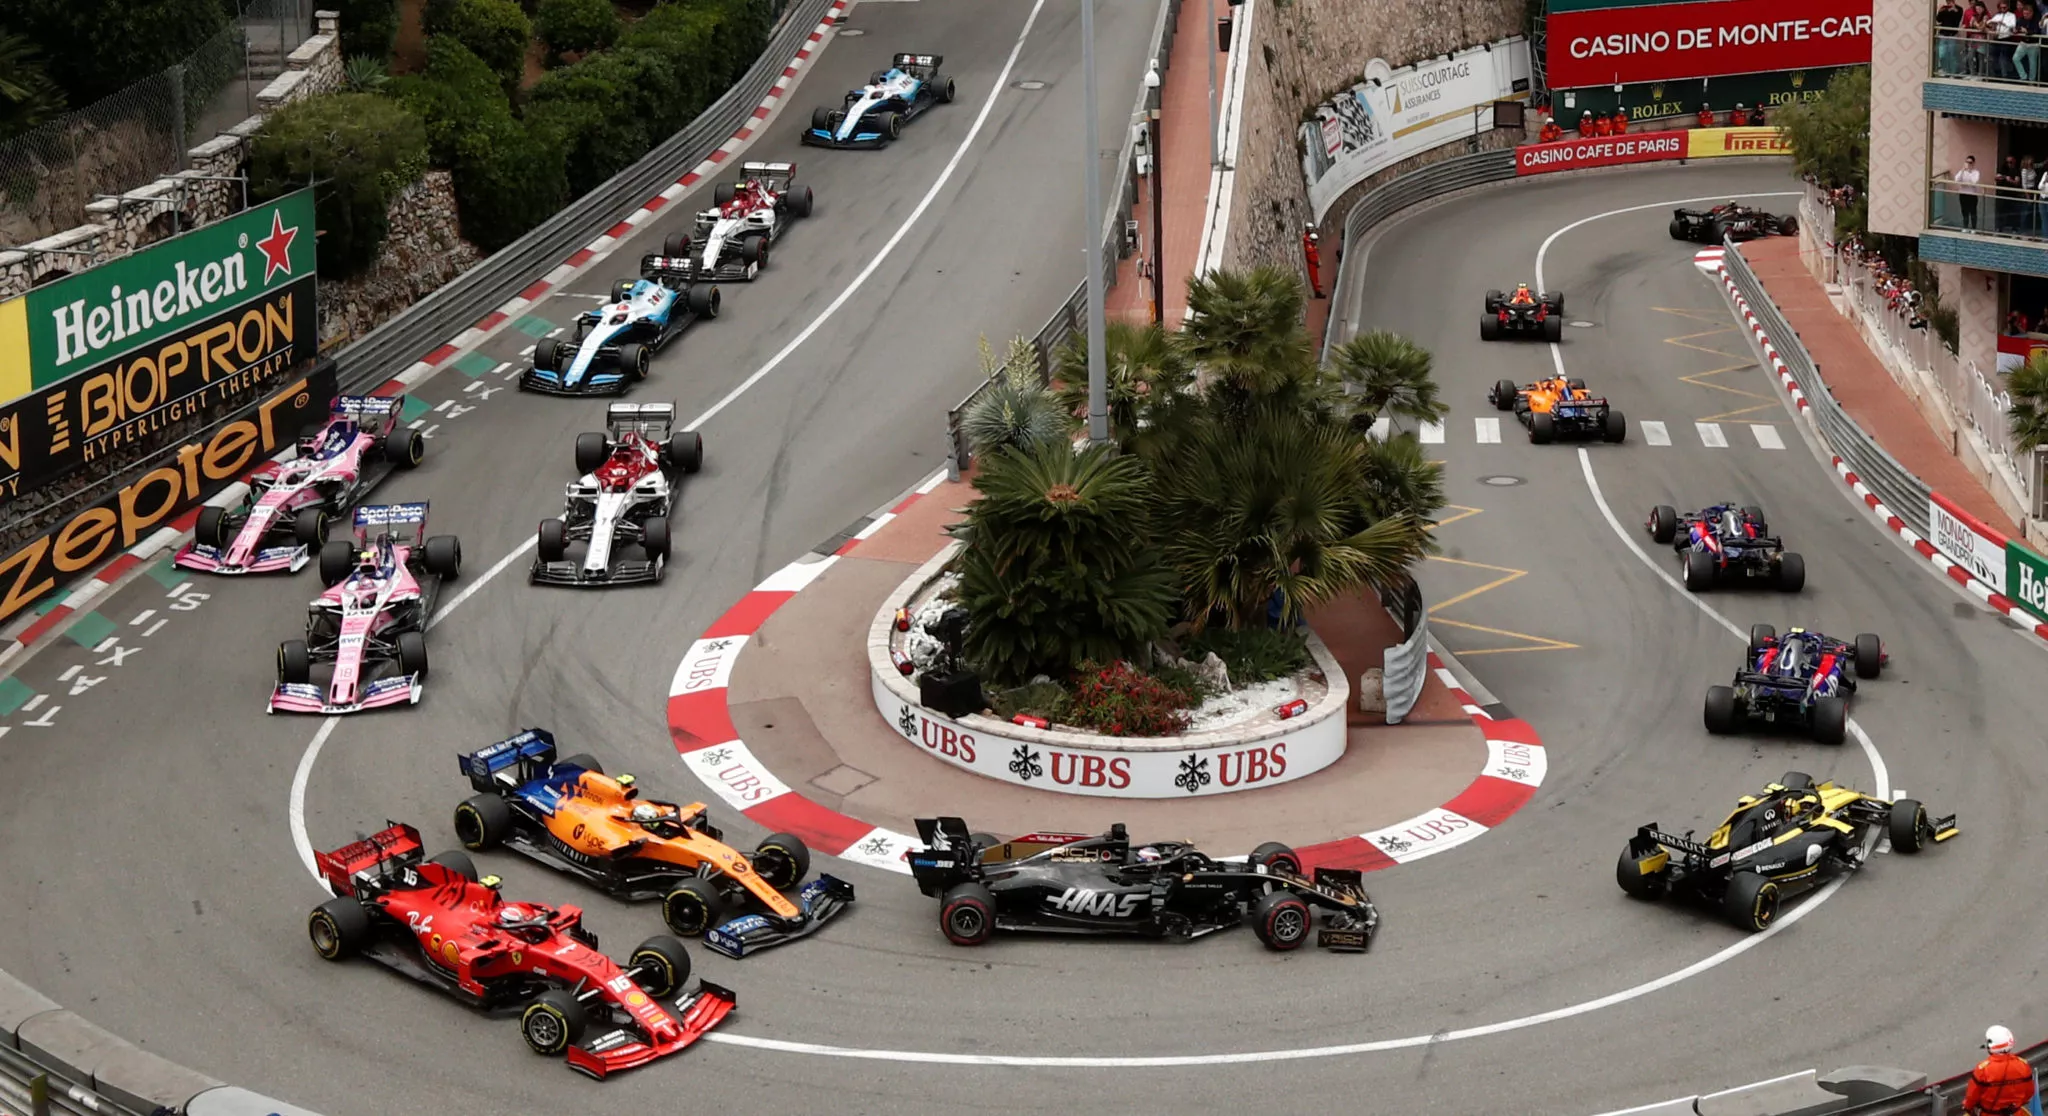 Monaco Grand Prix Circuit in Monaco, Europe | Racing - Rated 5.7